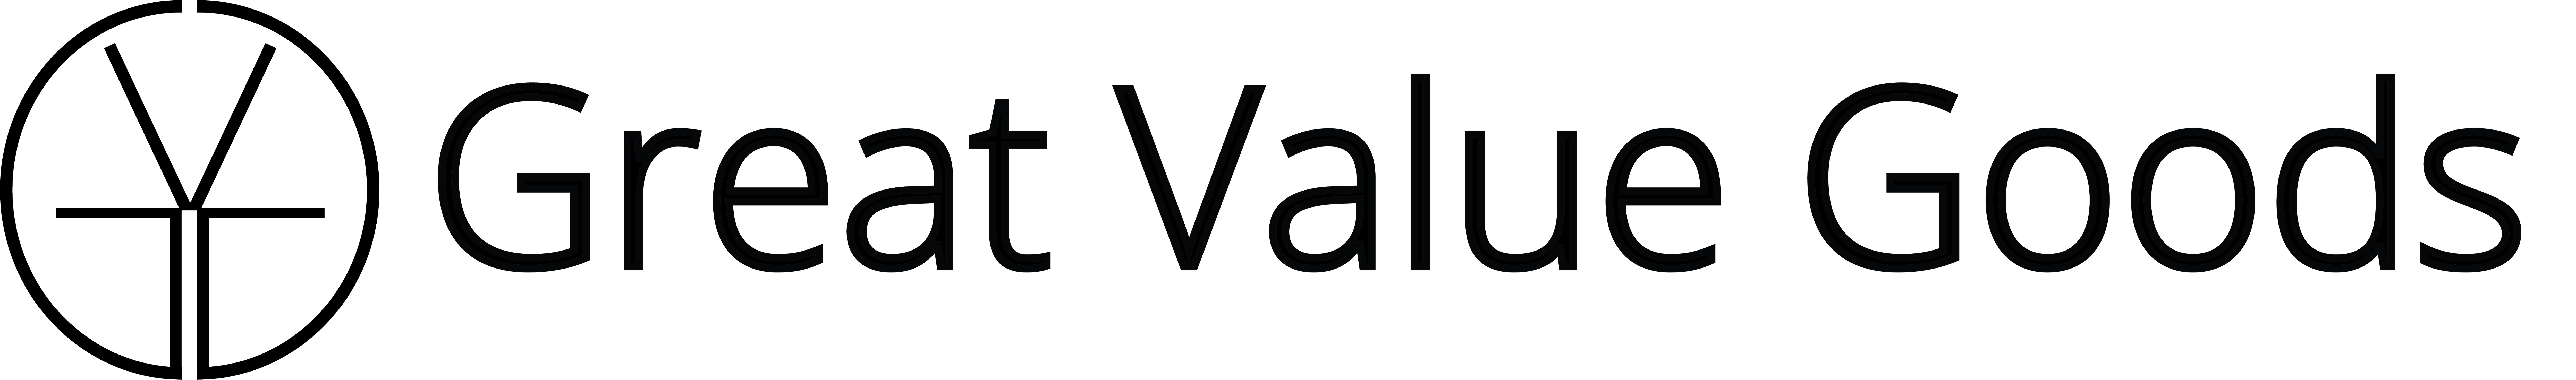 Vektor-großes Wert Logo PNG Hochwertiges Bild